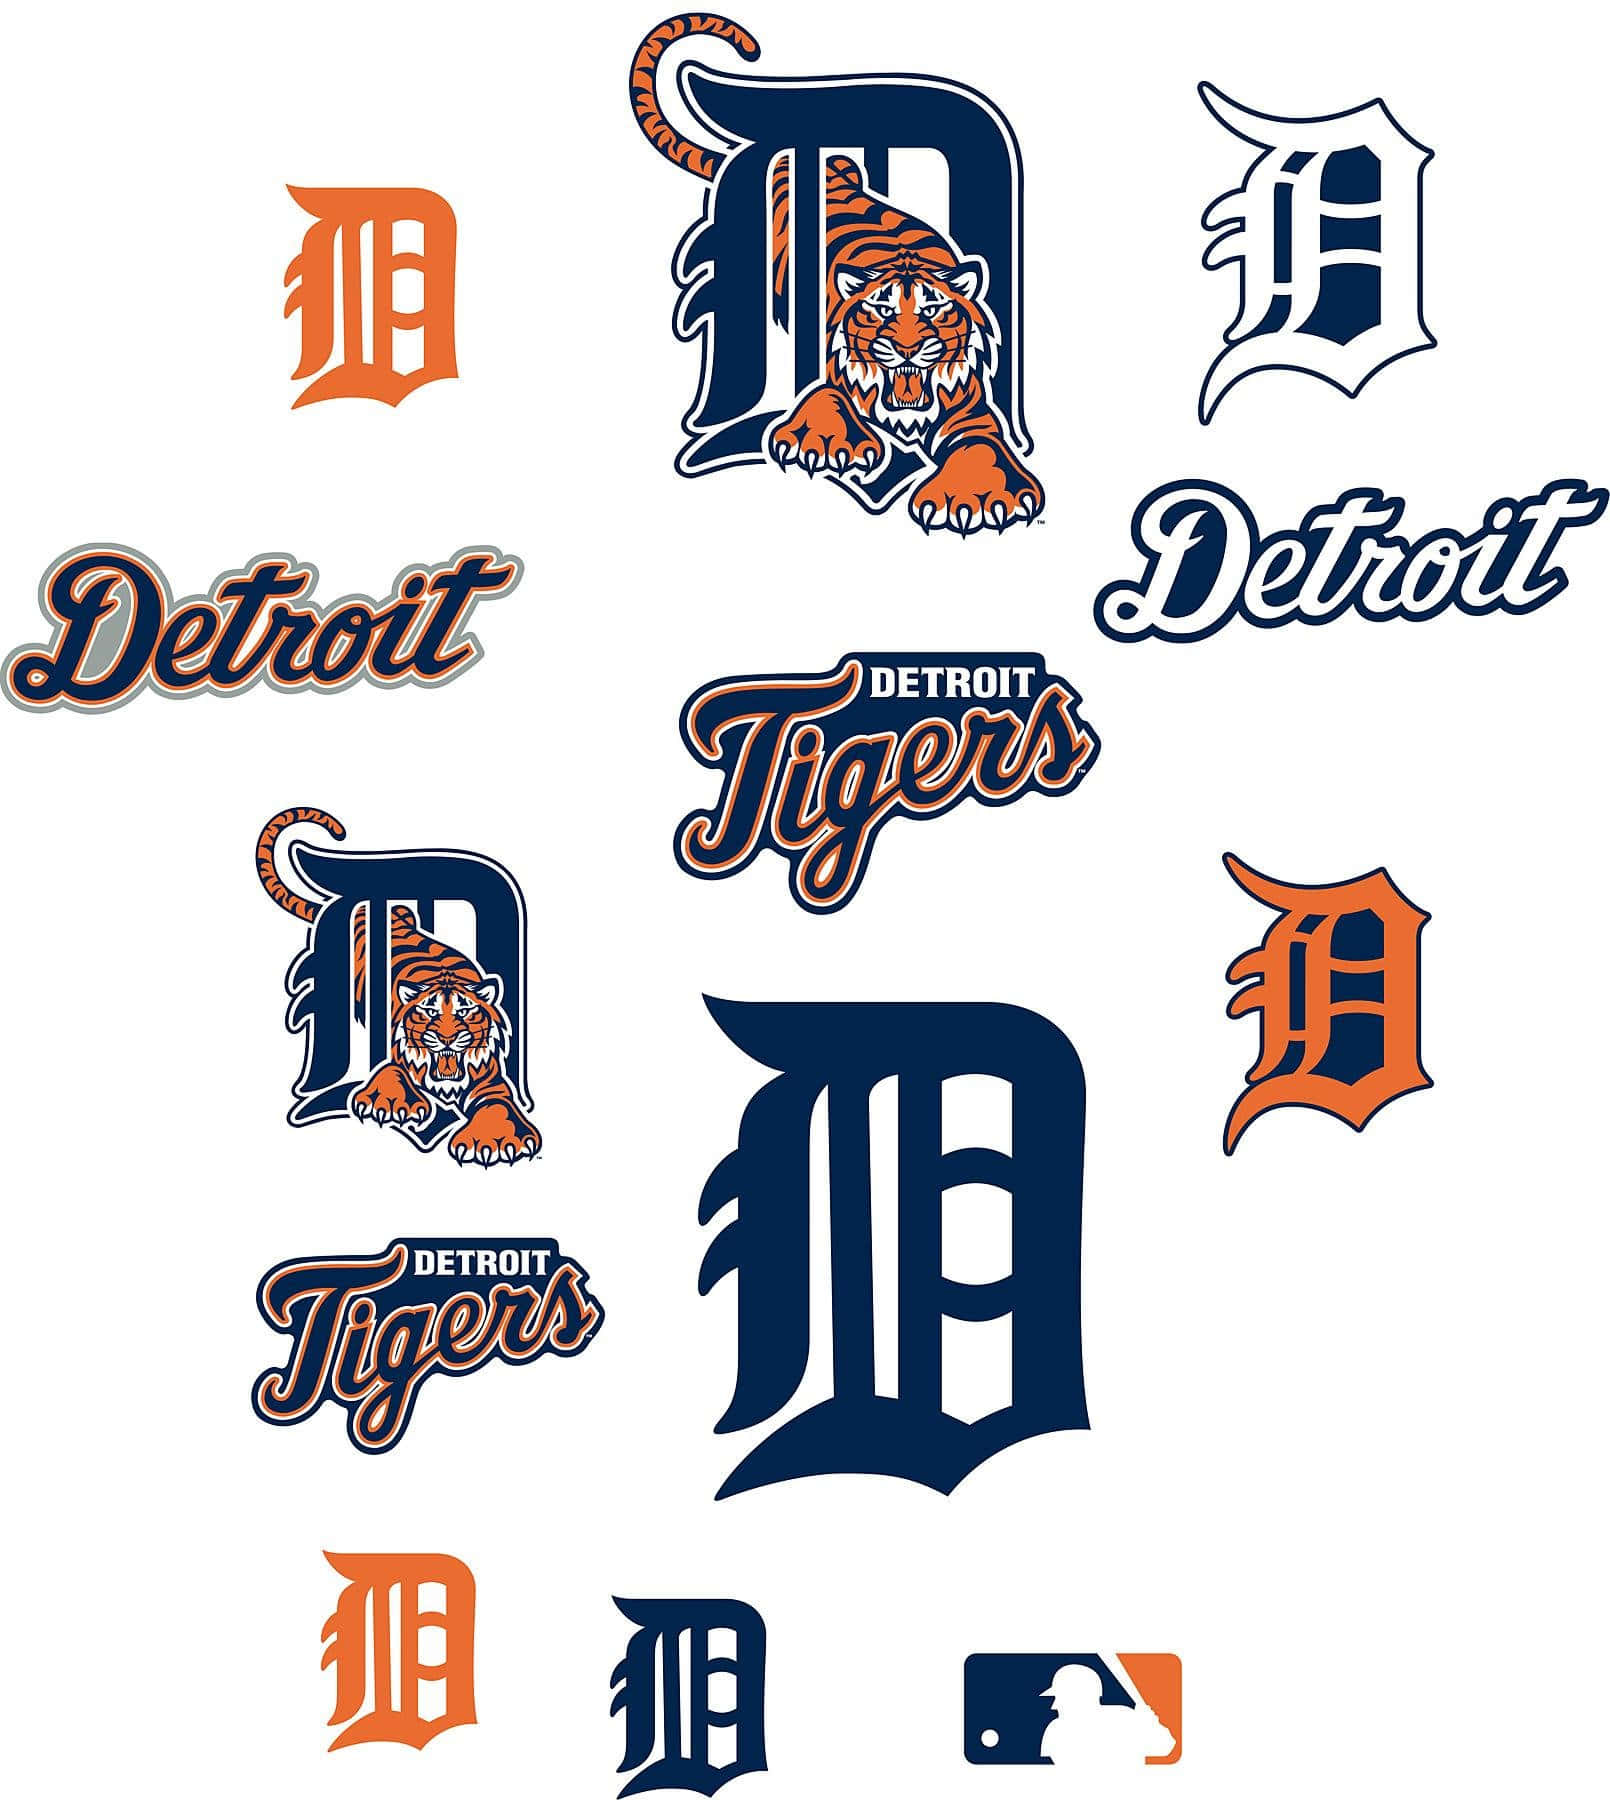 Download Variations Of The Detroit Tigers Logo Wallpaper | Wallpapers.com